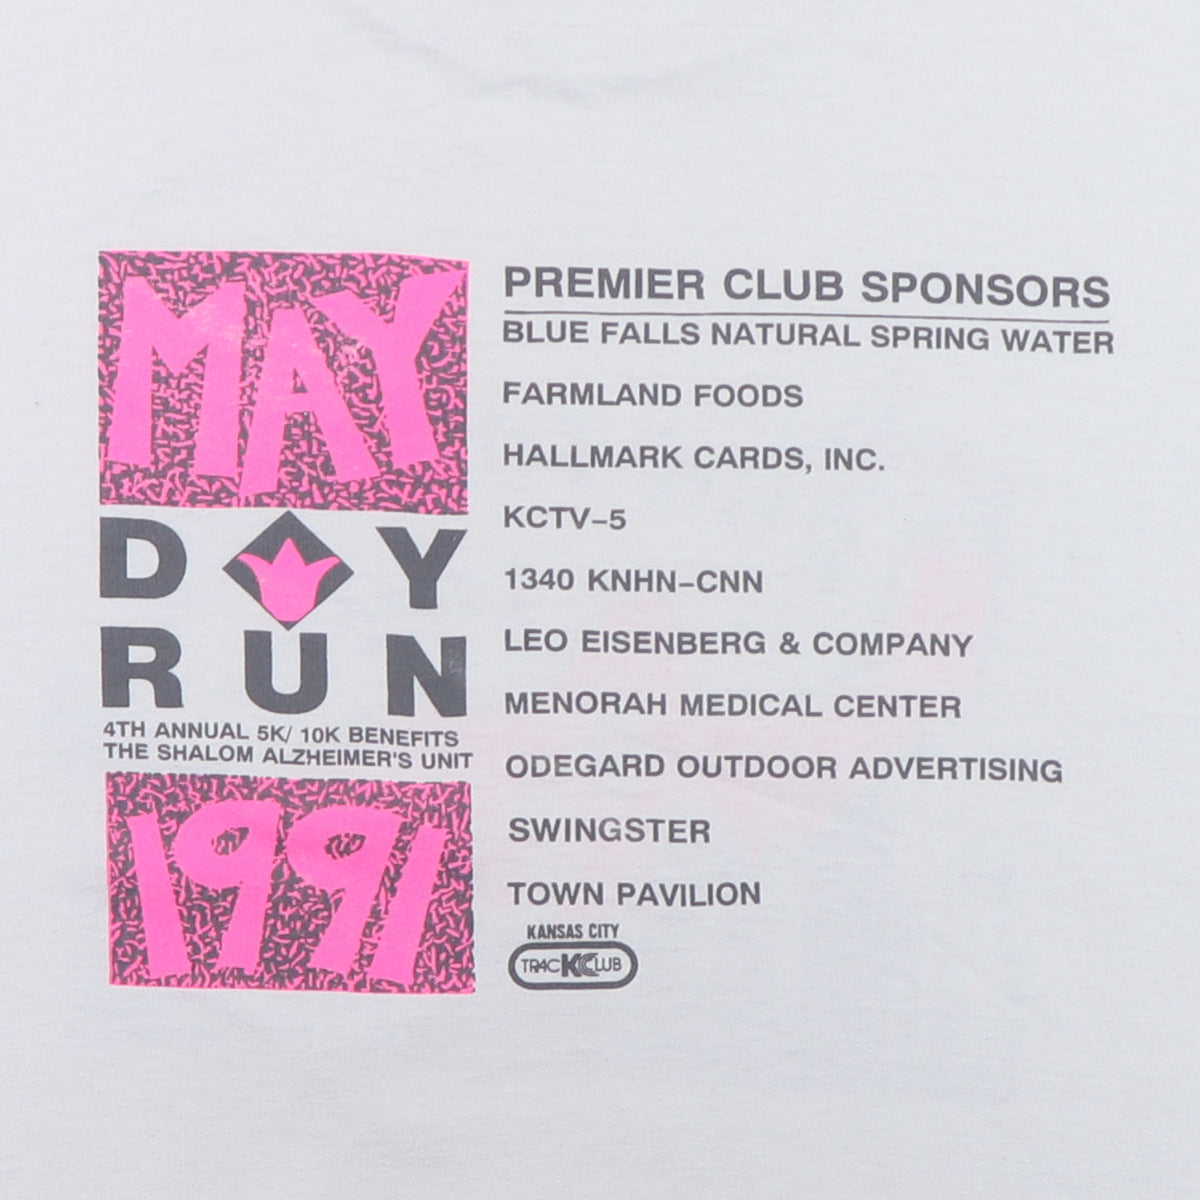 1991 Run For Your Lives King Kong Shirt